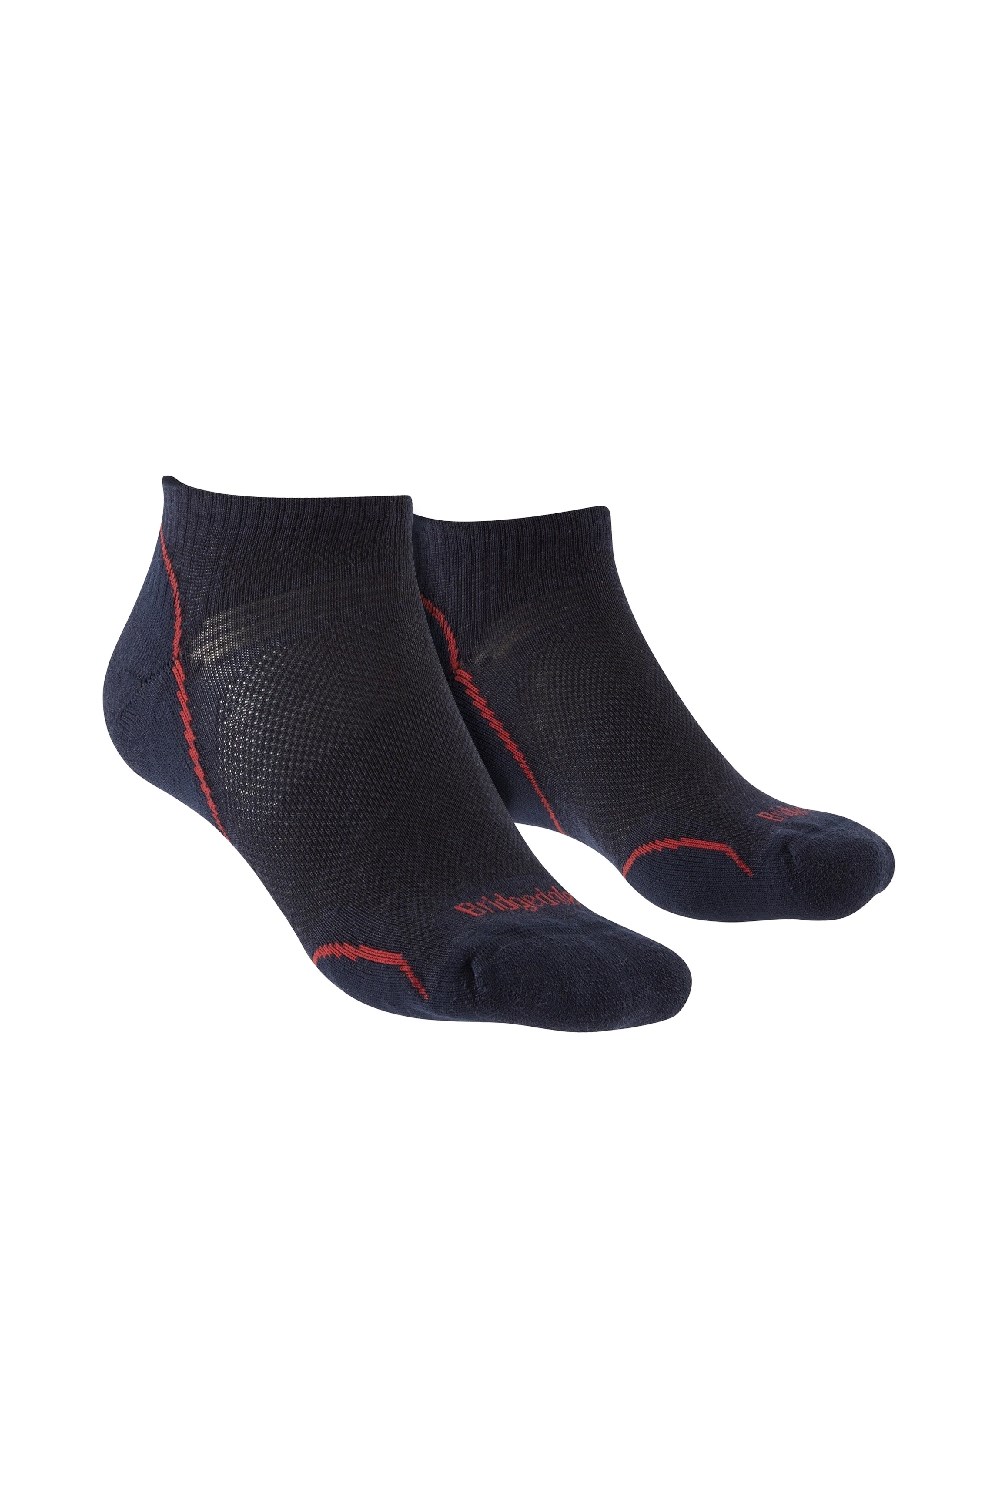 Mens Hiking Ultralight T2 Merino Socks